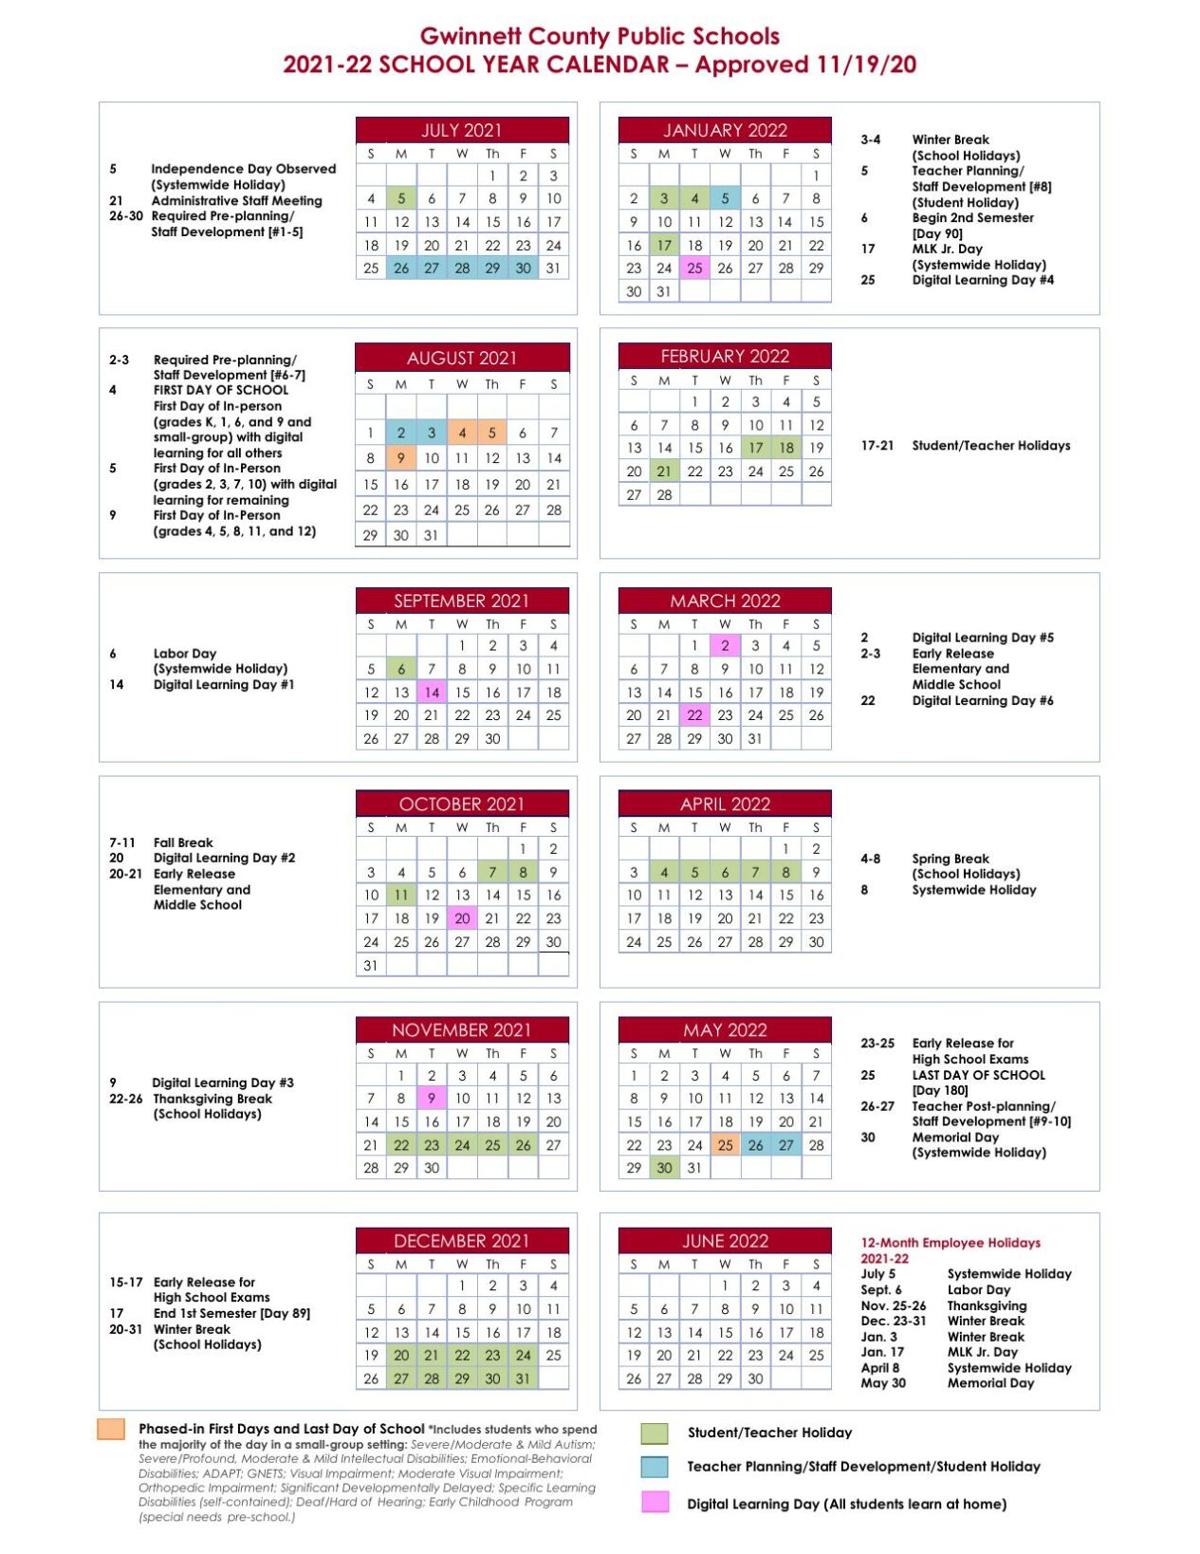 Gwinnett Tech Calendar Spring 2022 Gwinnett County Public Schools' 2021-2022 School Year Calendar | |  Gwinnettdailypost.com